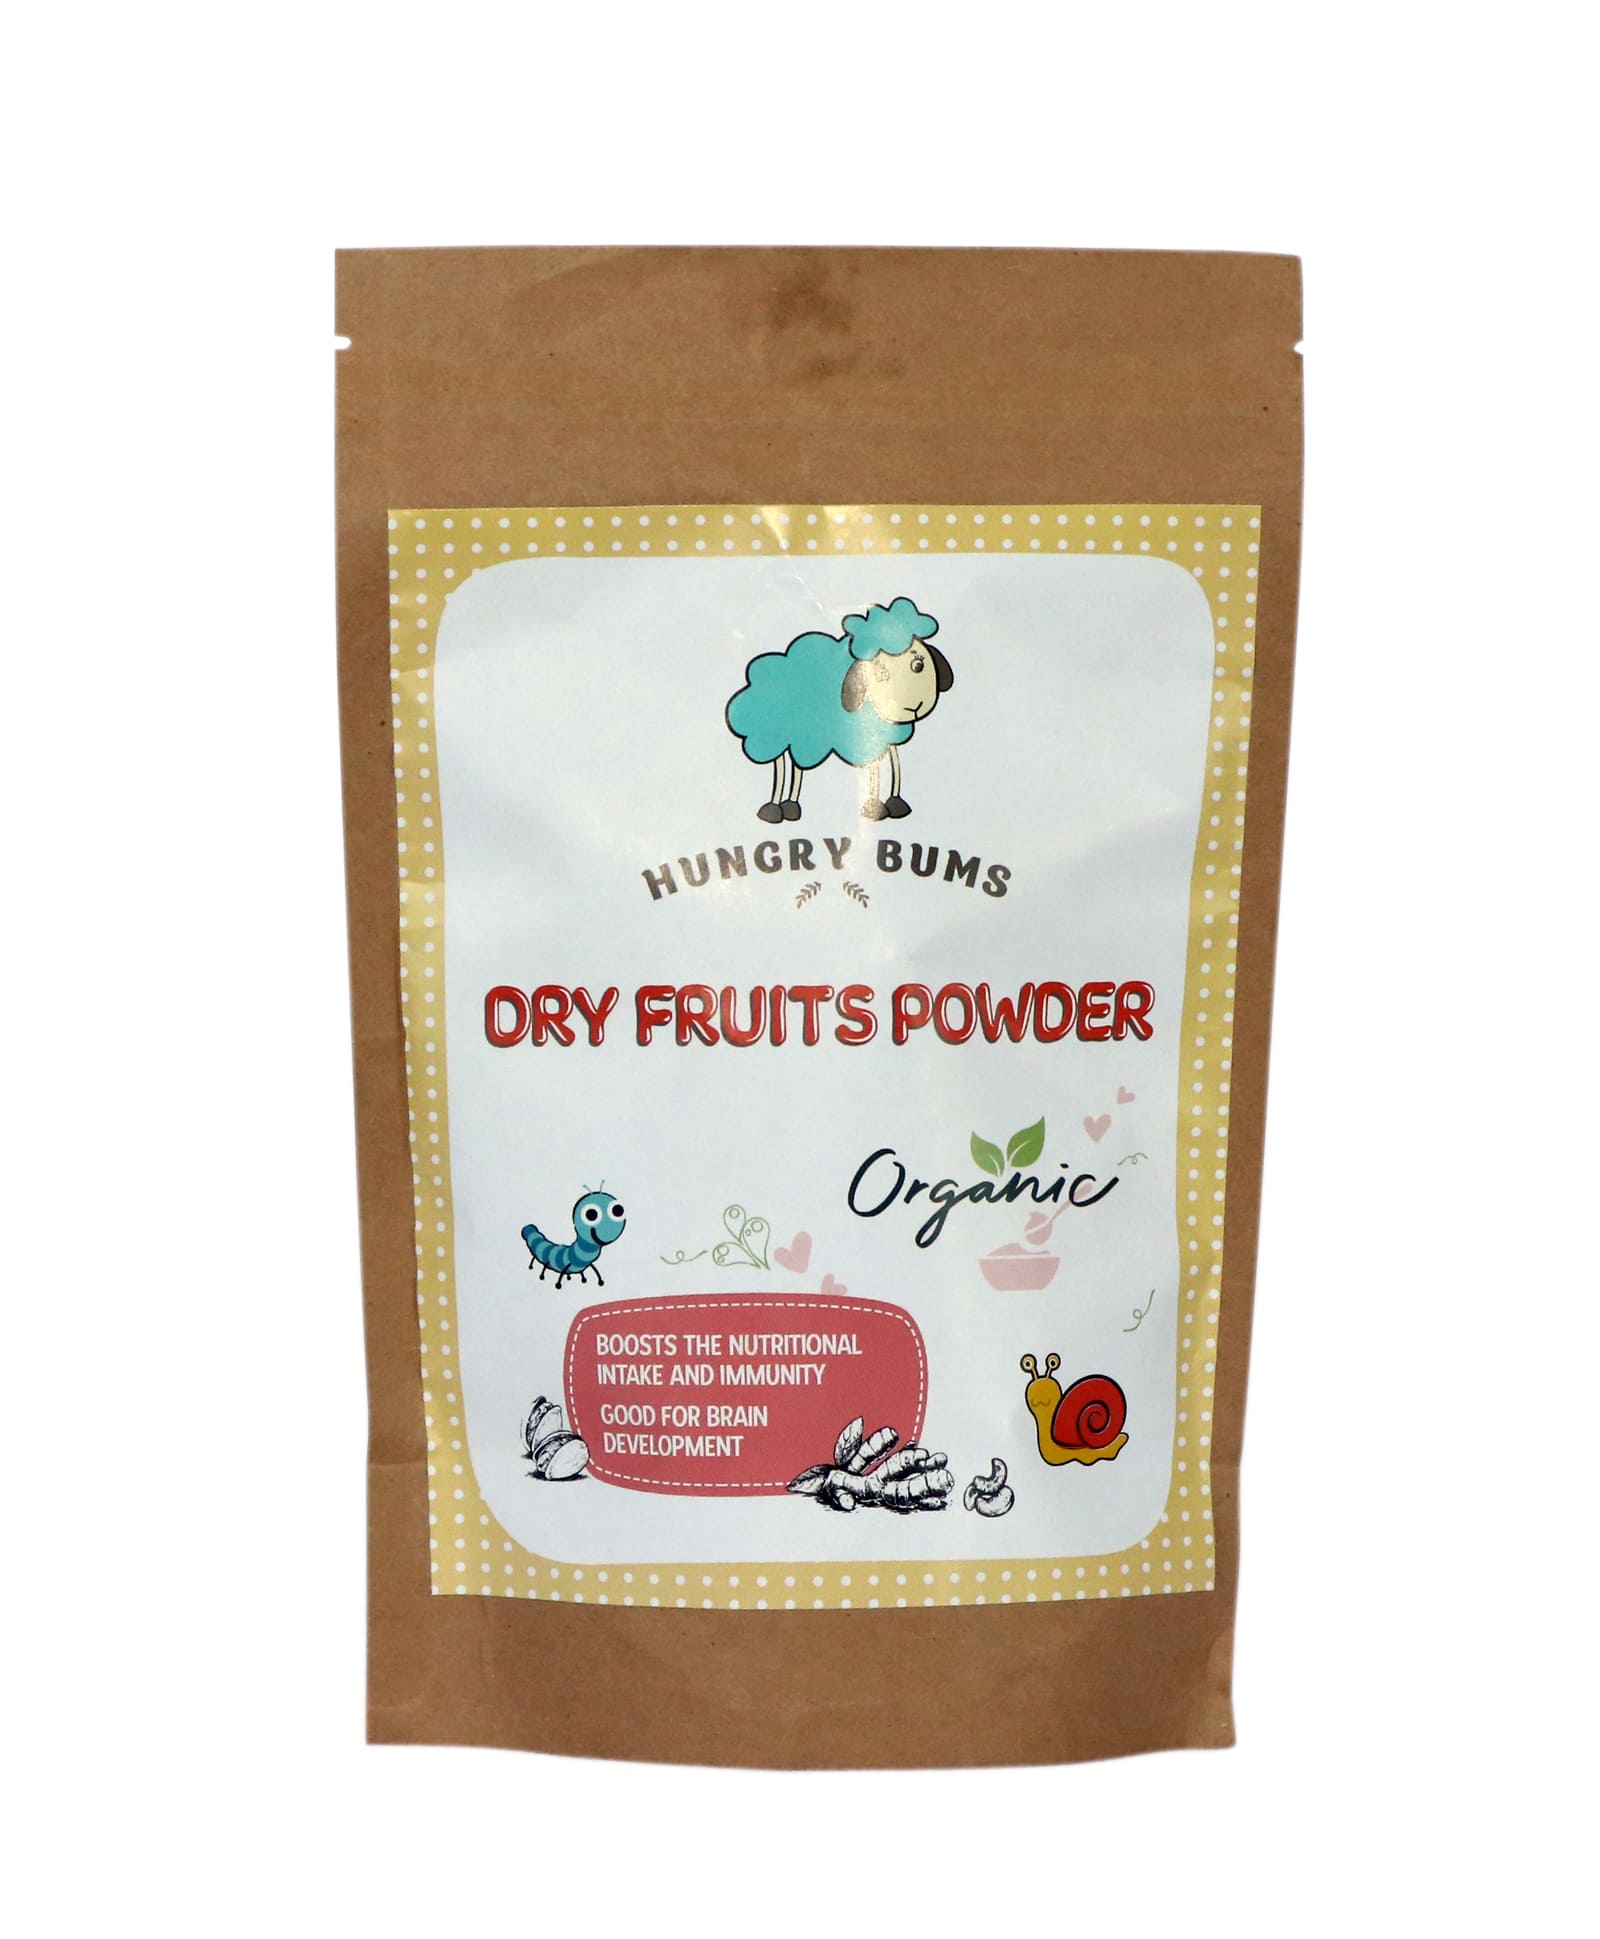 Organic dry fruits powder